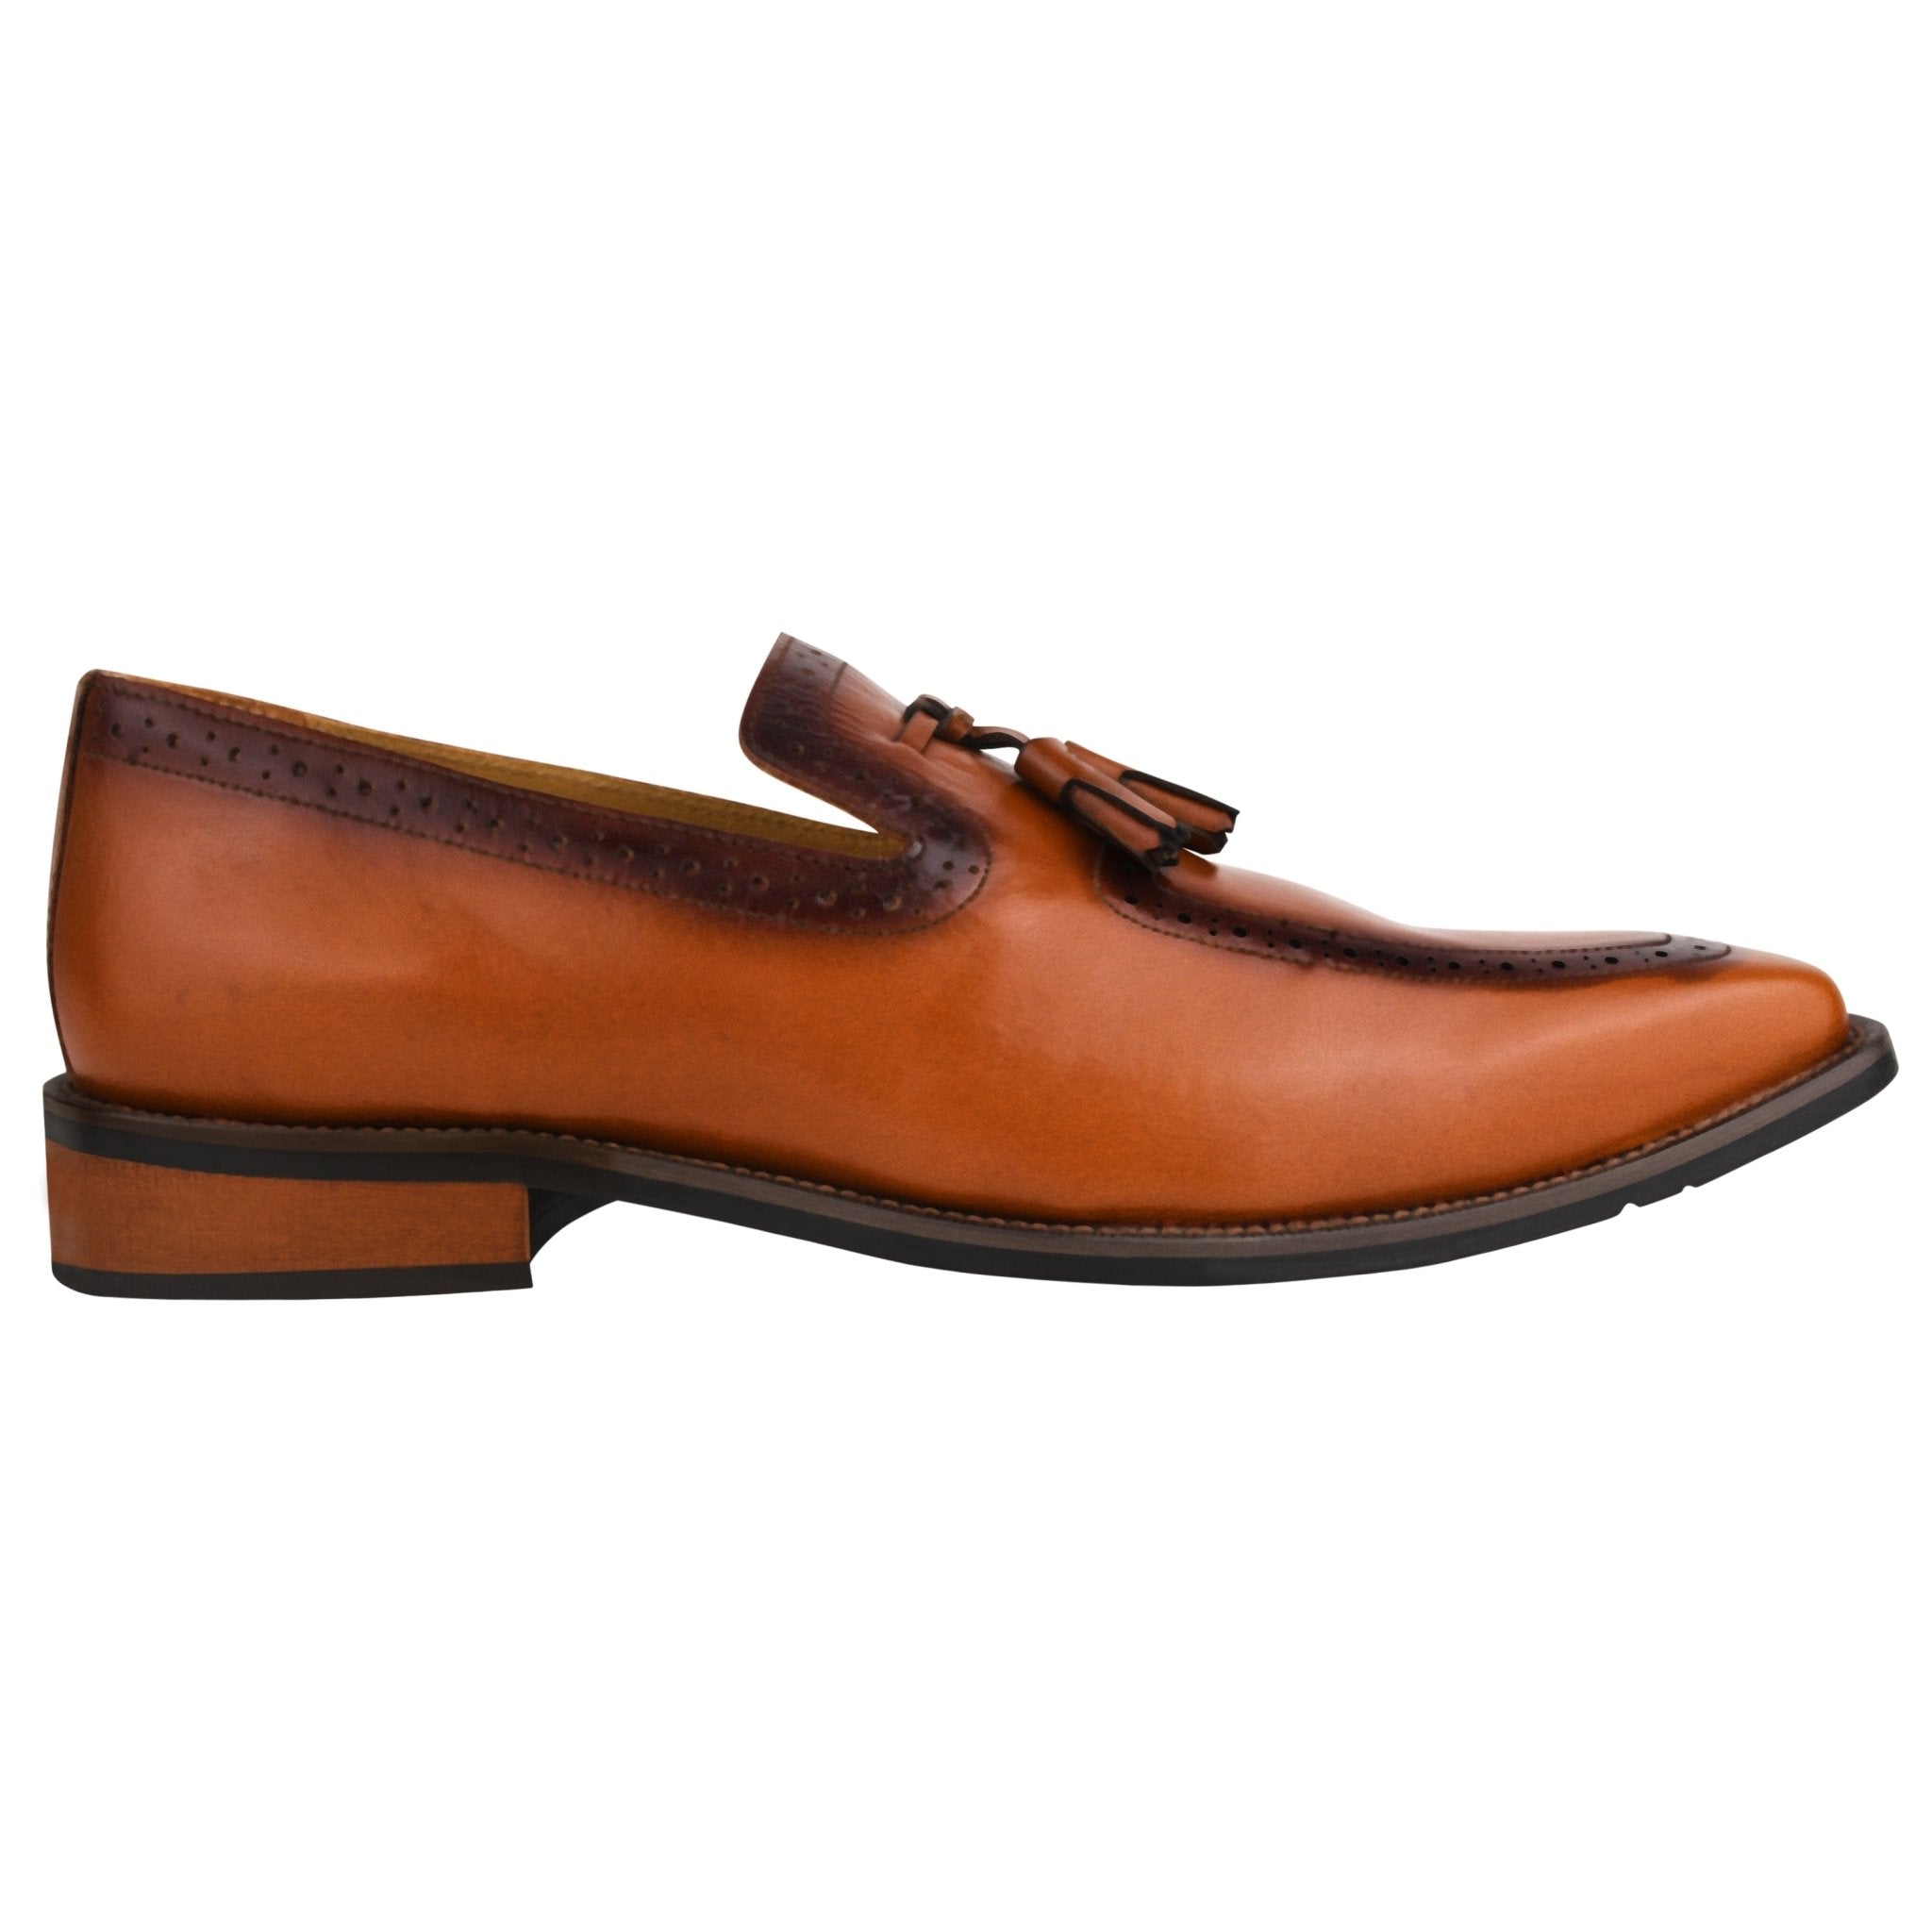 Men's Tassel Loafer Full Grain Leather Tassels Shoes in Black, Brown ...